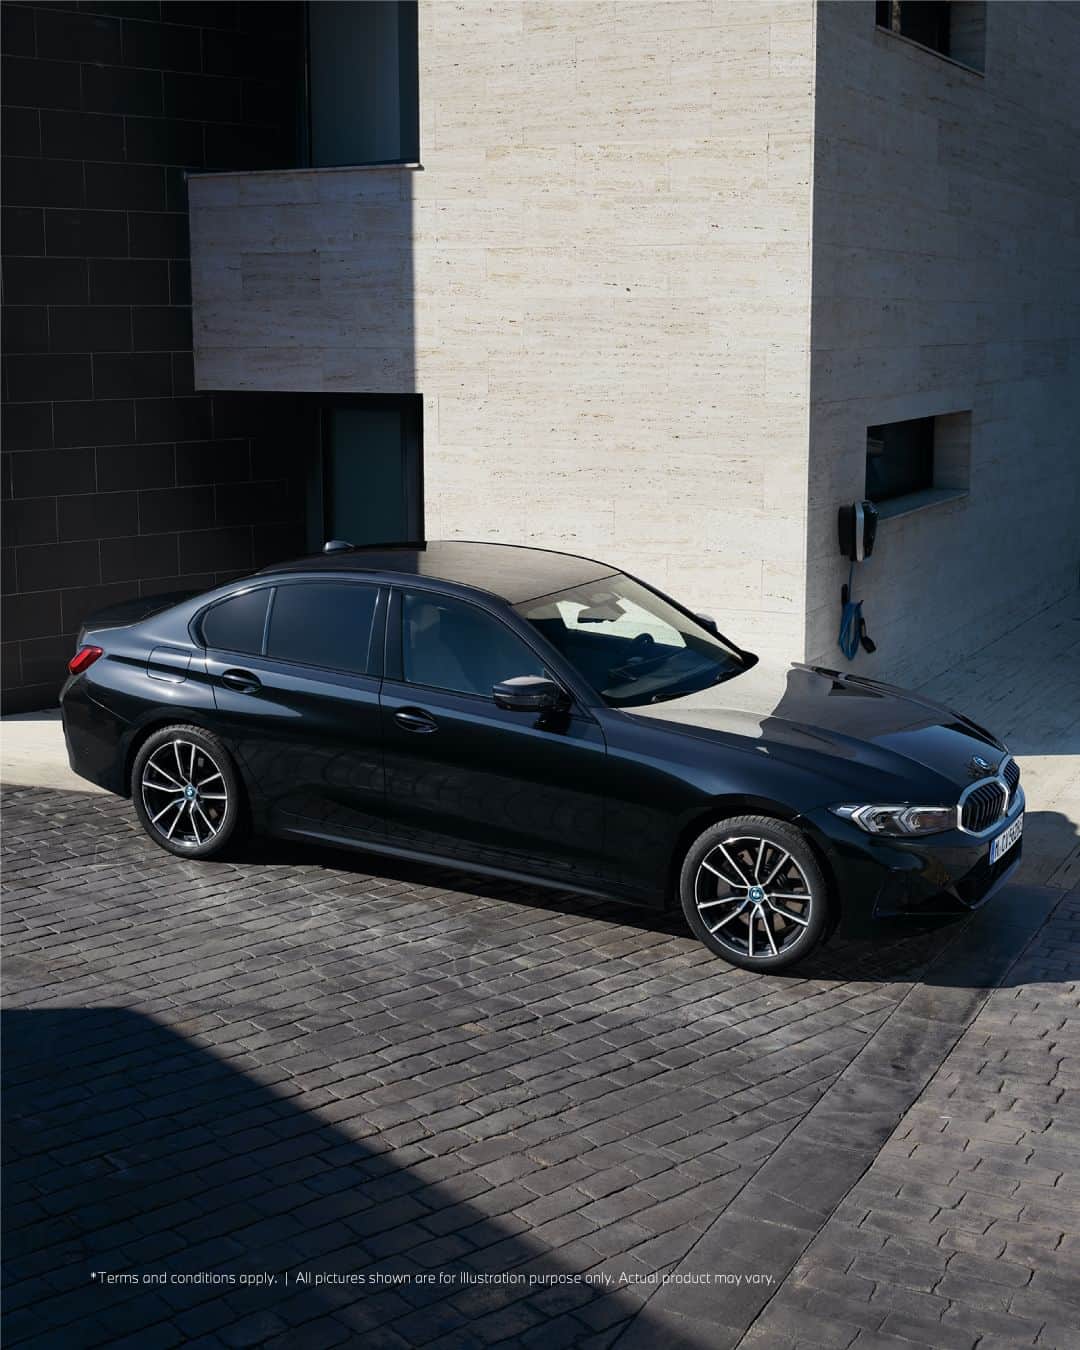 BMW Thailandのインスタグラム：「THE 3 สปอร์ตซีดานที่มาพร้อมกับความสปอร์ตเต็มพิกัดและความสามารถรอบด้านยิ่งกว่าใคร ผสมผสานไปด้วย 3 ไฮไลท์ที่โดดเด่นทั้งในด้าน Design, Easy Connect และ Performance ที่คุณจะได้สนุกไปกับการขับขี่อย่างเต็มที่ในทุกเส้นทาง  #BMW #BMWTH #JOYisBMW #สุนทรียภาพแห่งการขับขี่ #THE3」